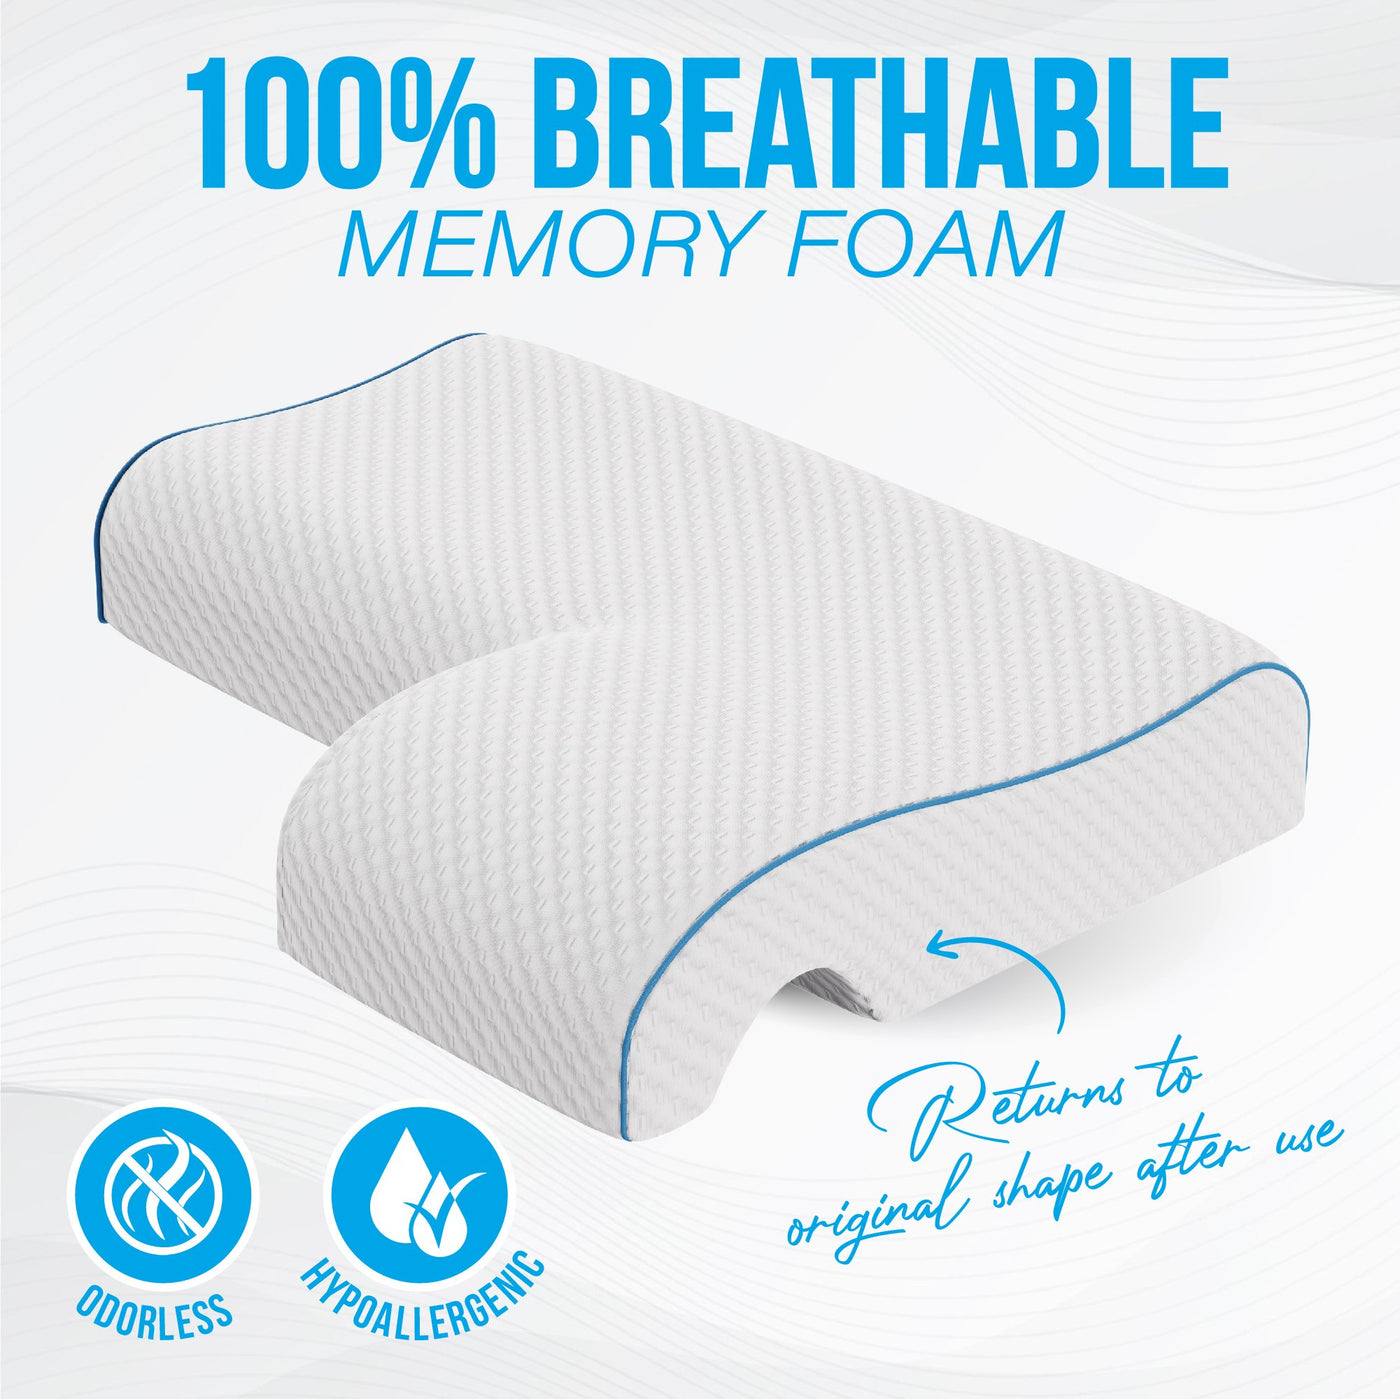 Trakk Ergonomic Knee Pillow Support Memory Foam Sleeping On Side